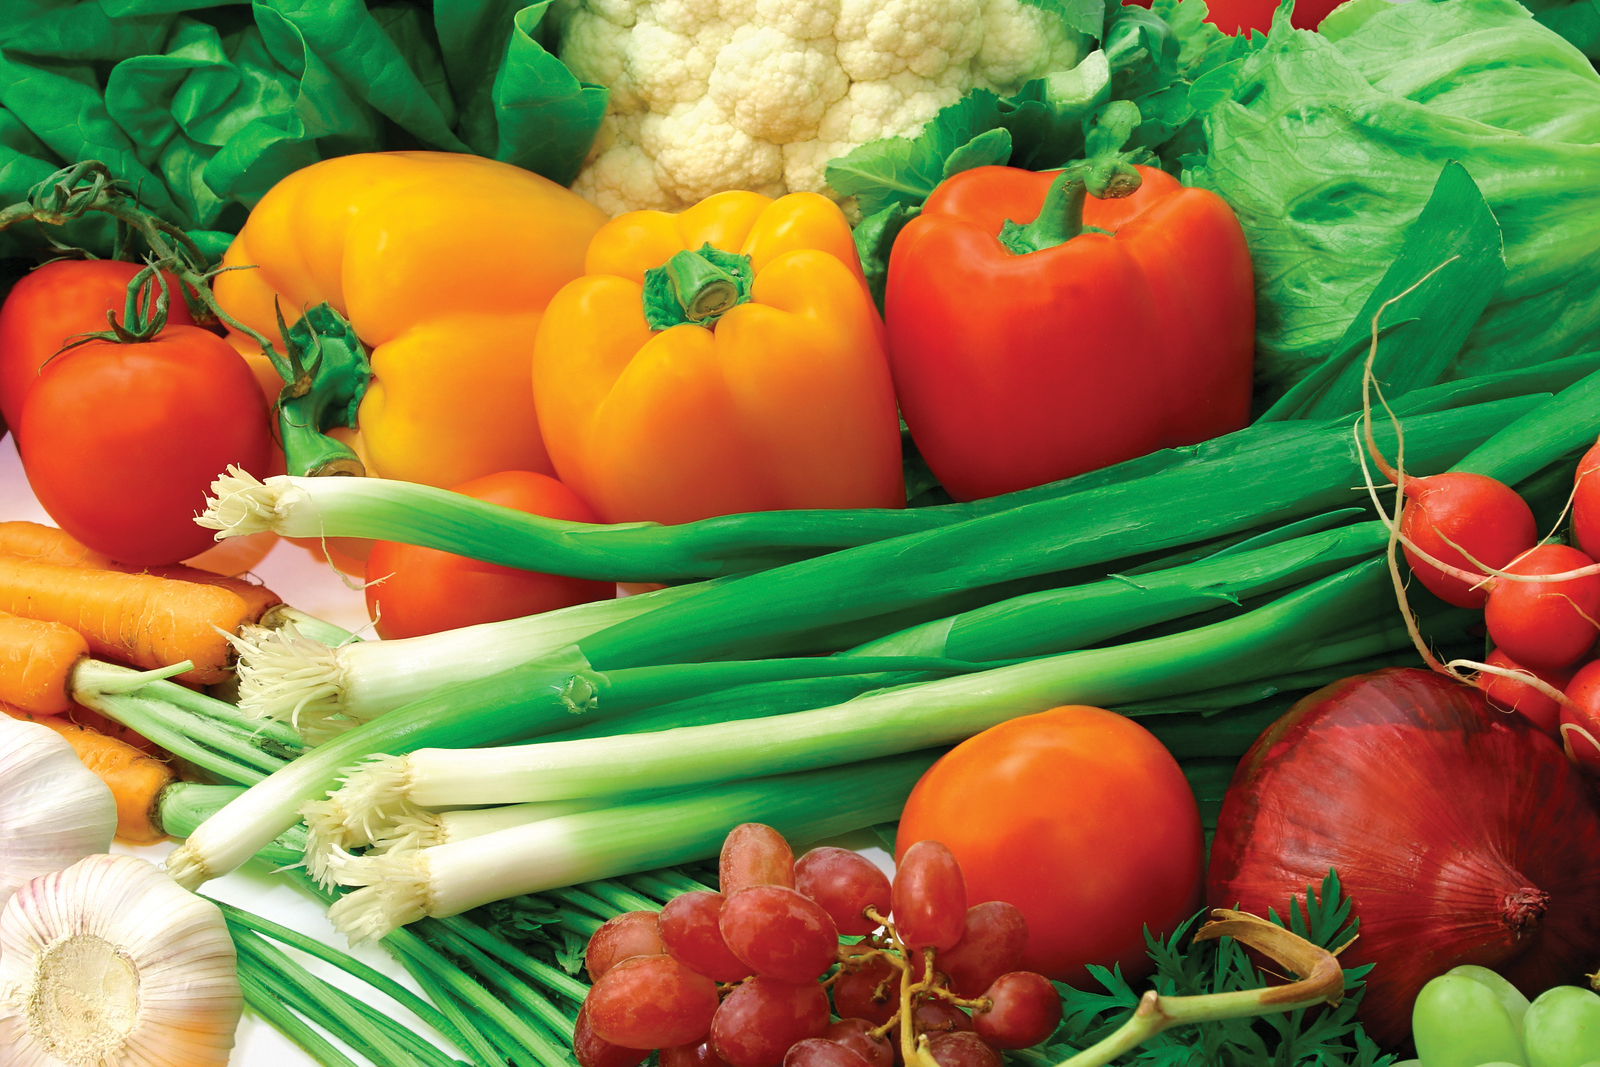 Harvesting and storing home garden vegetables | UMN Extension